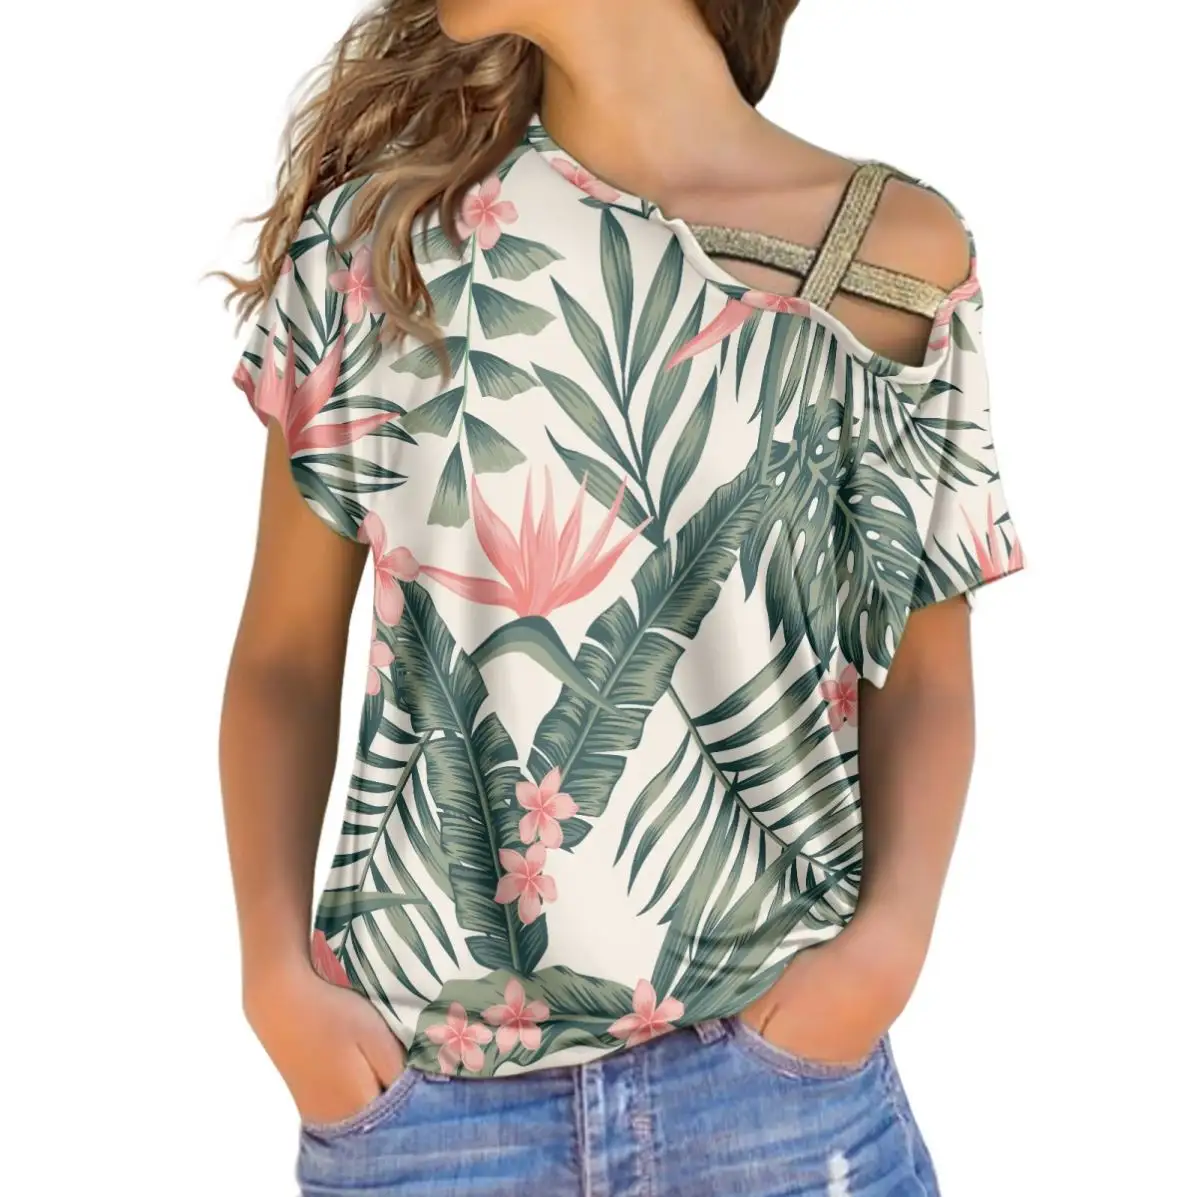 Cetakan sesuai permintaan desain bunga pisang daun surga atasan Fashion T-Shirt oblong tali silang berkilau bahu miring